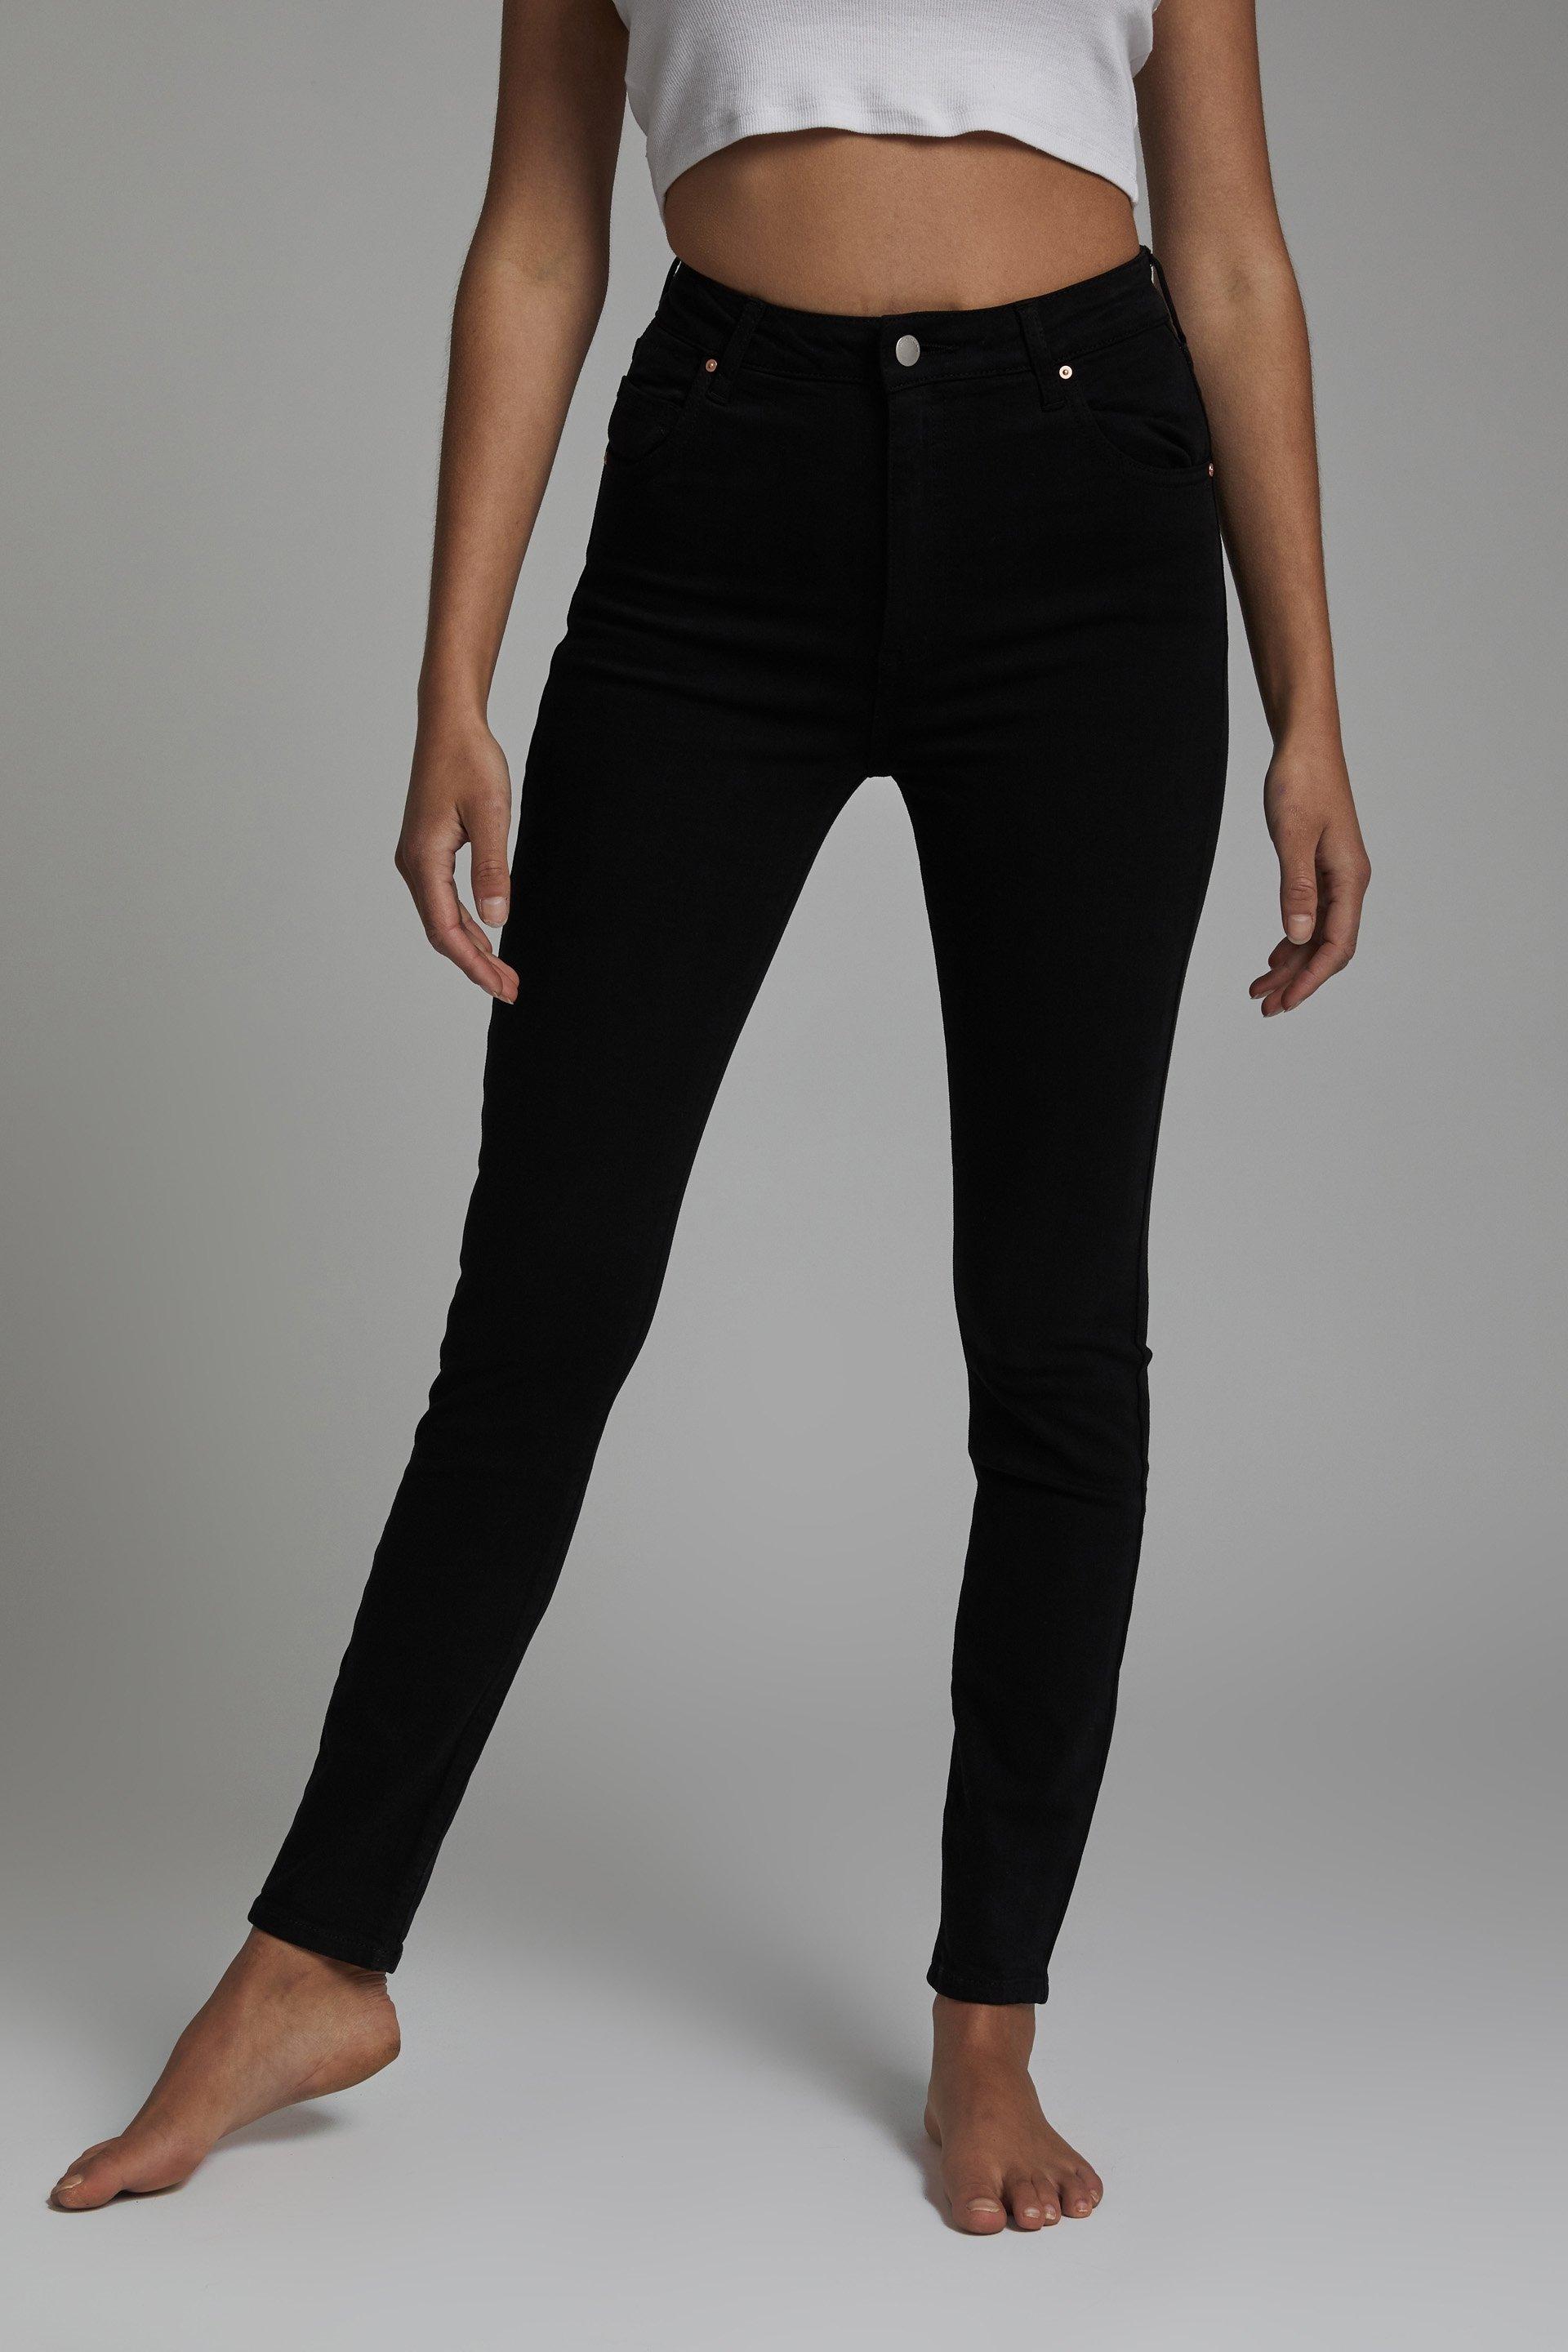 High rise skinny jean - black Cotton On Jeans | Superbalist.com